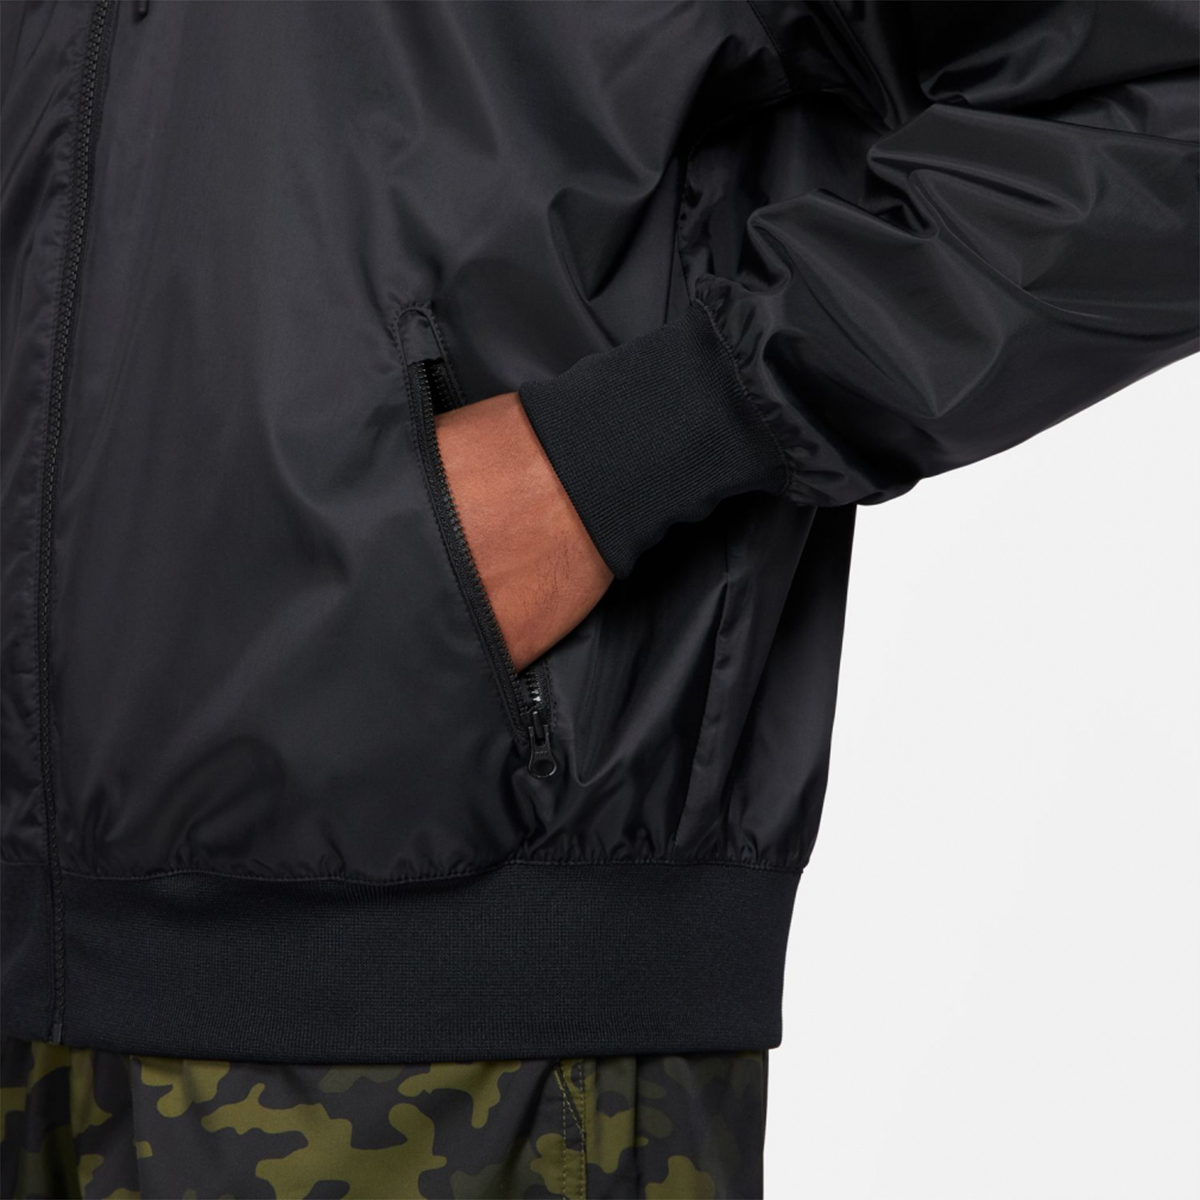  Nike jacket NIKE full Zip f-ti- sport wear Wind Runner men's unisex [ clothes ]yu00572